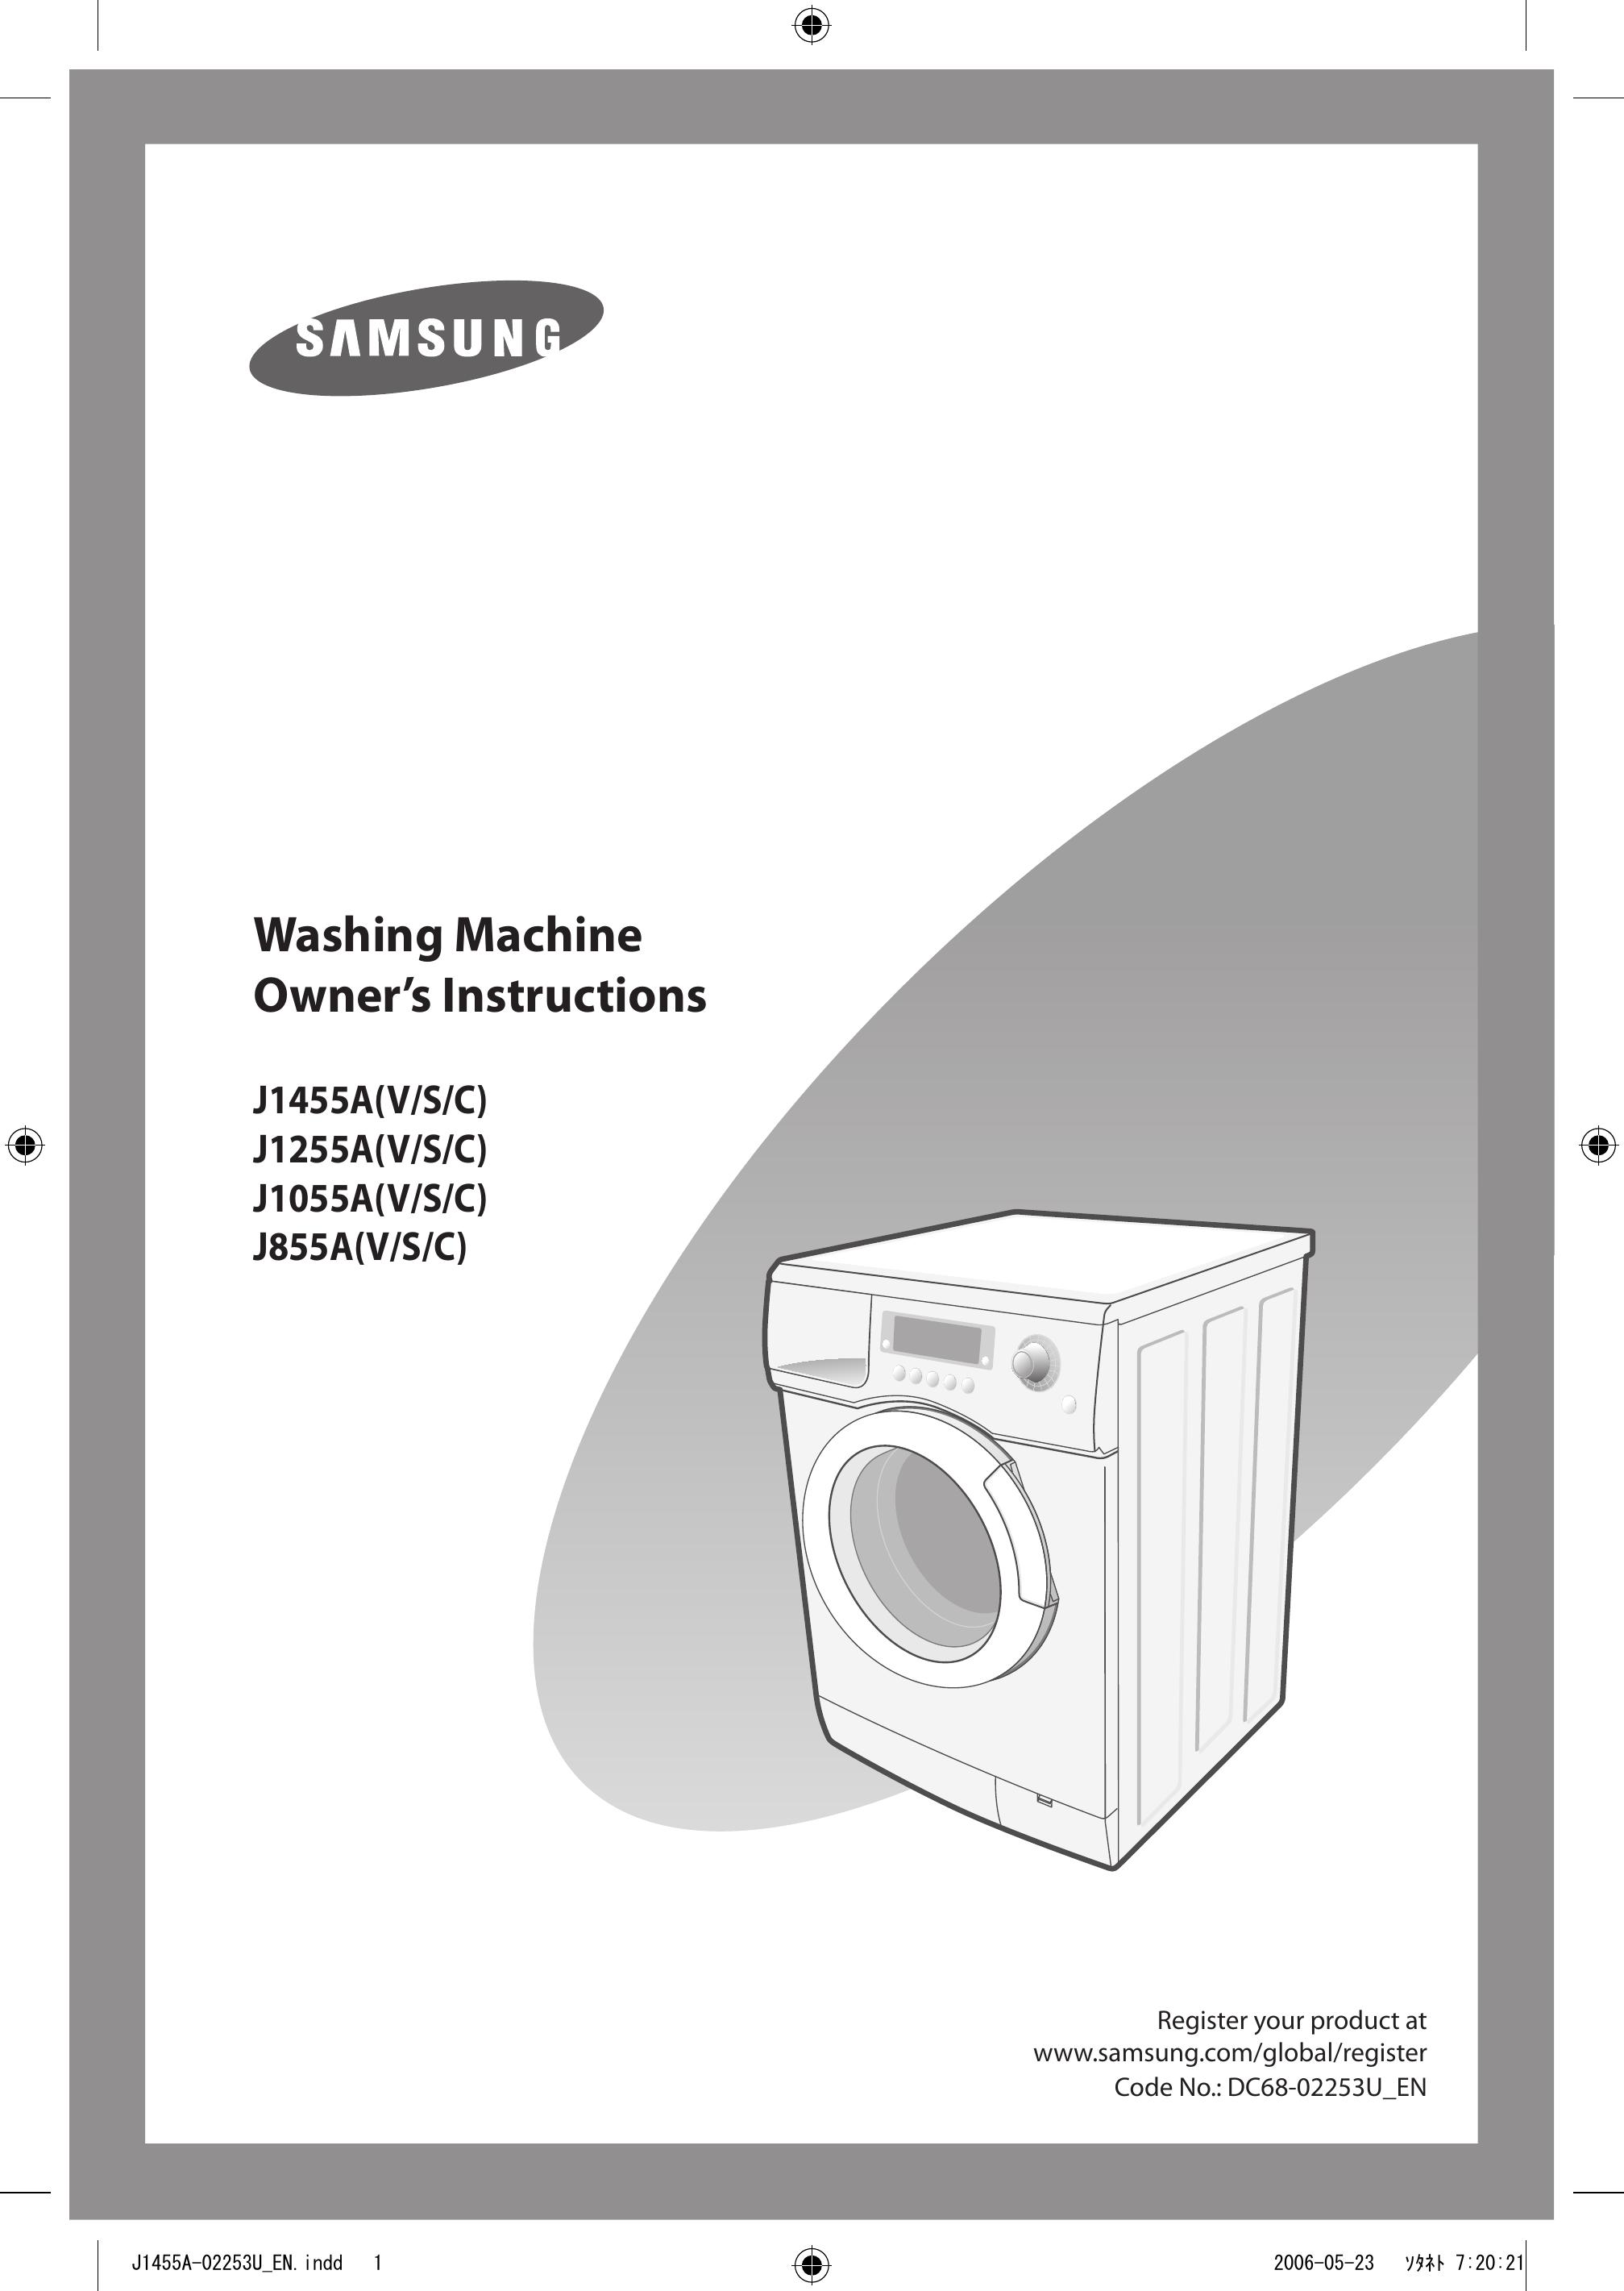 Samsung J855AS Washer/Dryer User Manual